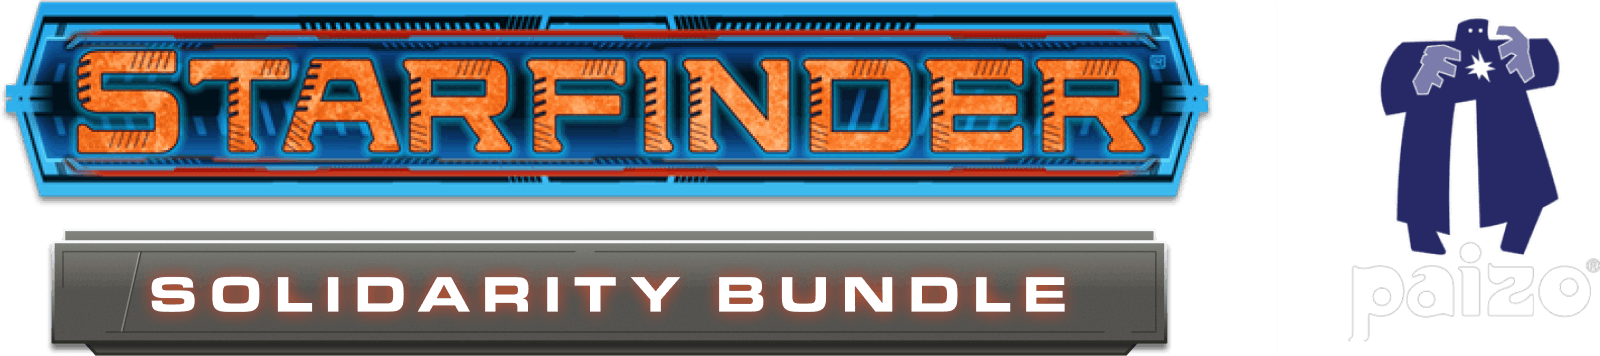 Humble RPG Bundle: Starfinder Solidarity Bundle by Paizo Inc.